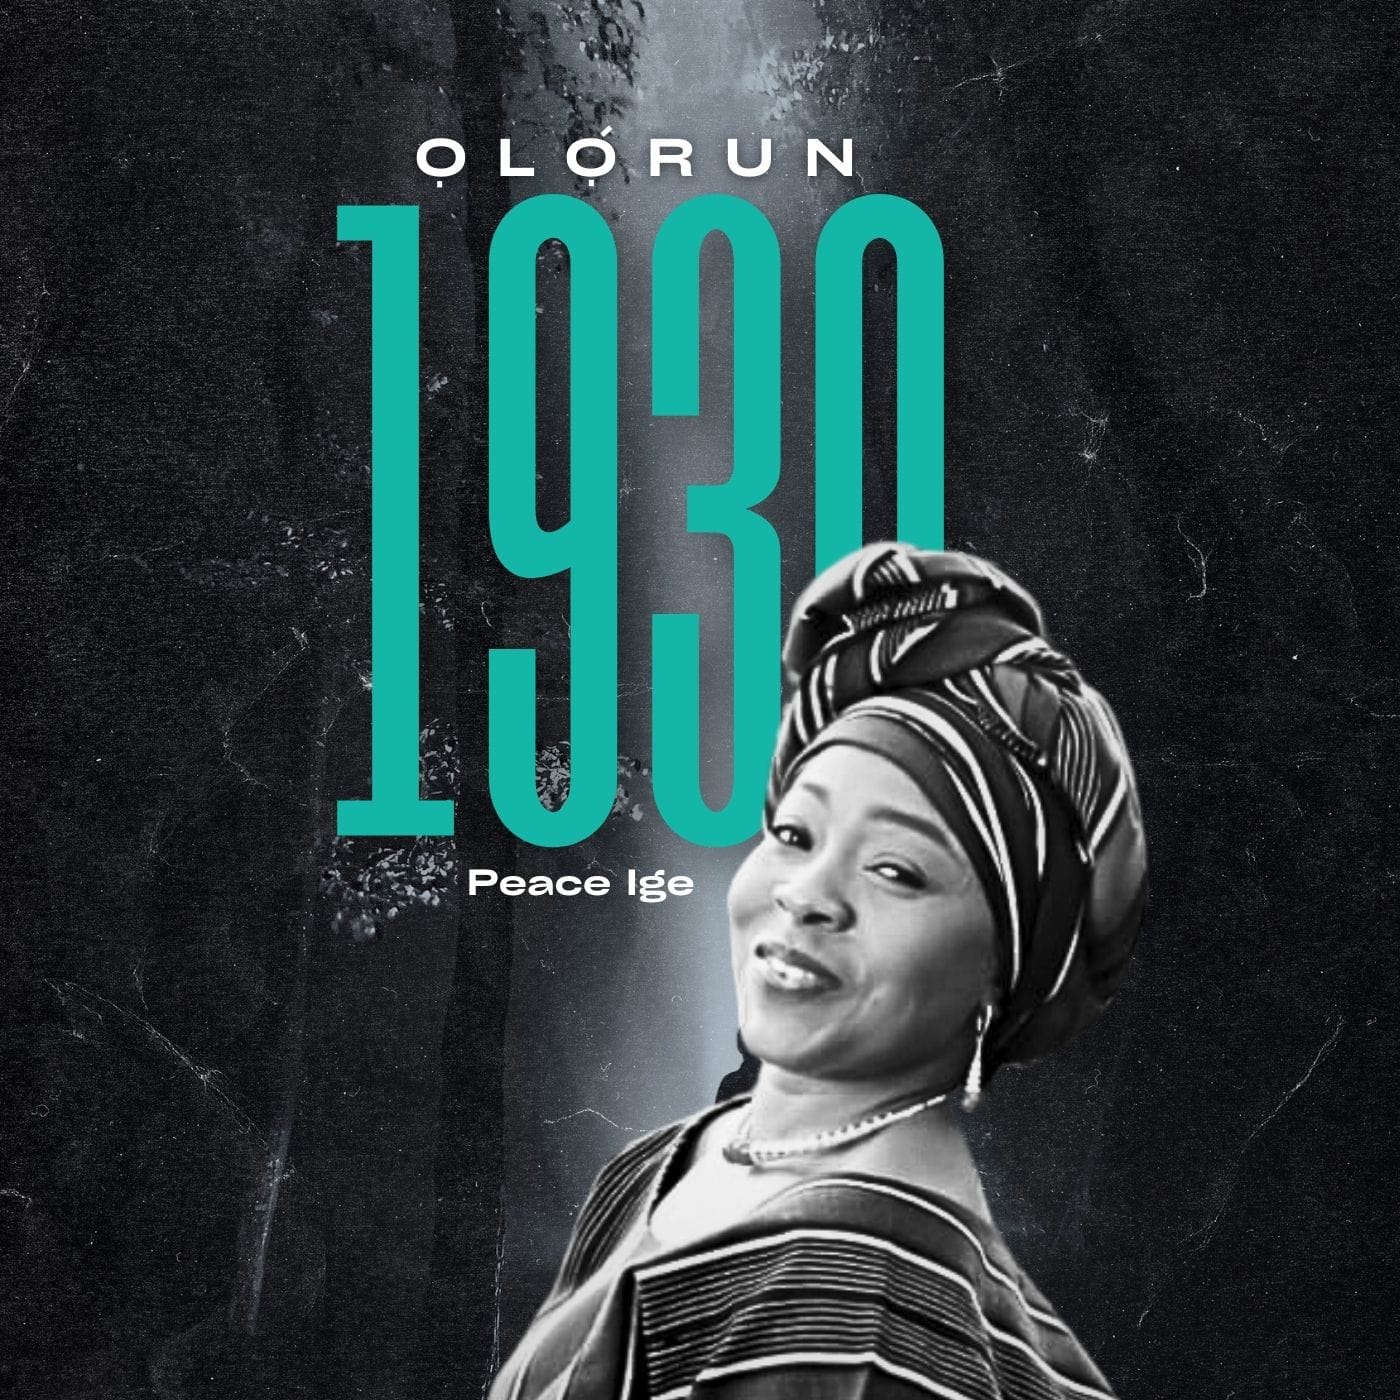 Download Music: Olorun 1930  Peace Ige [Video]